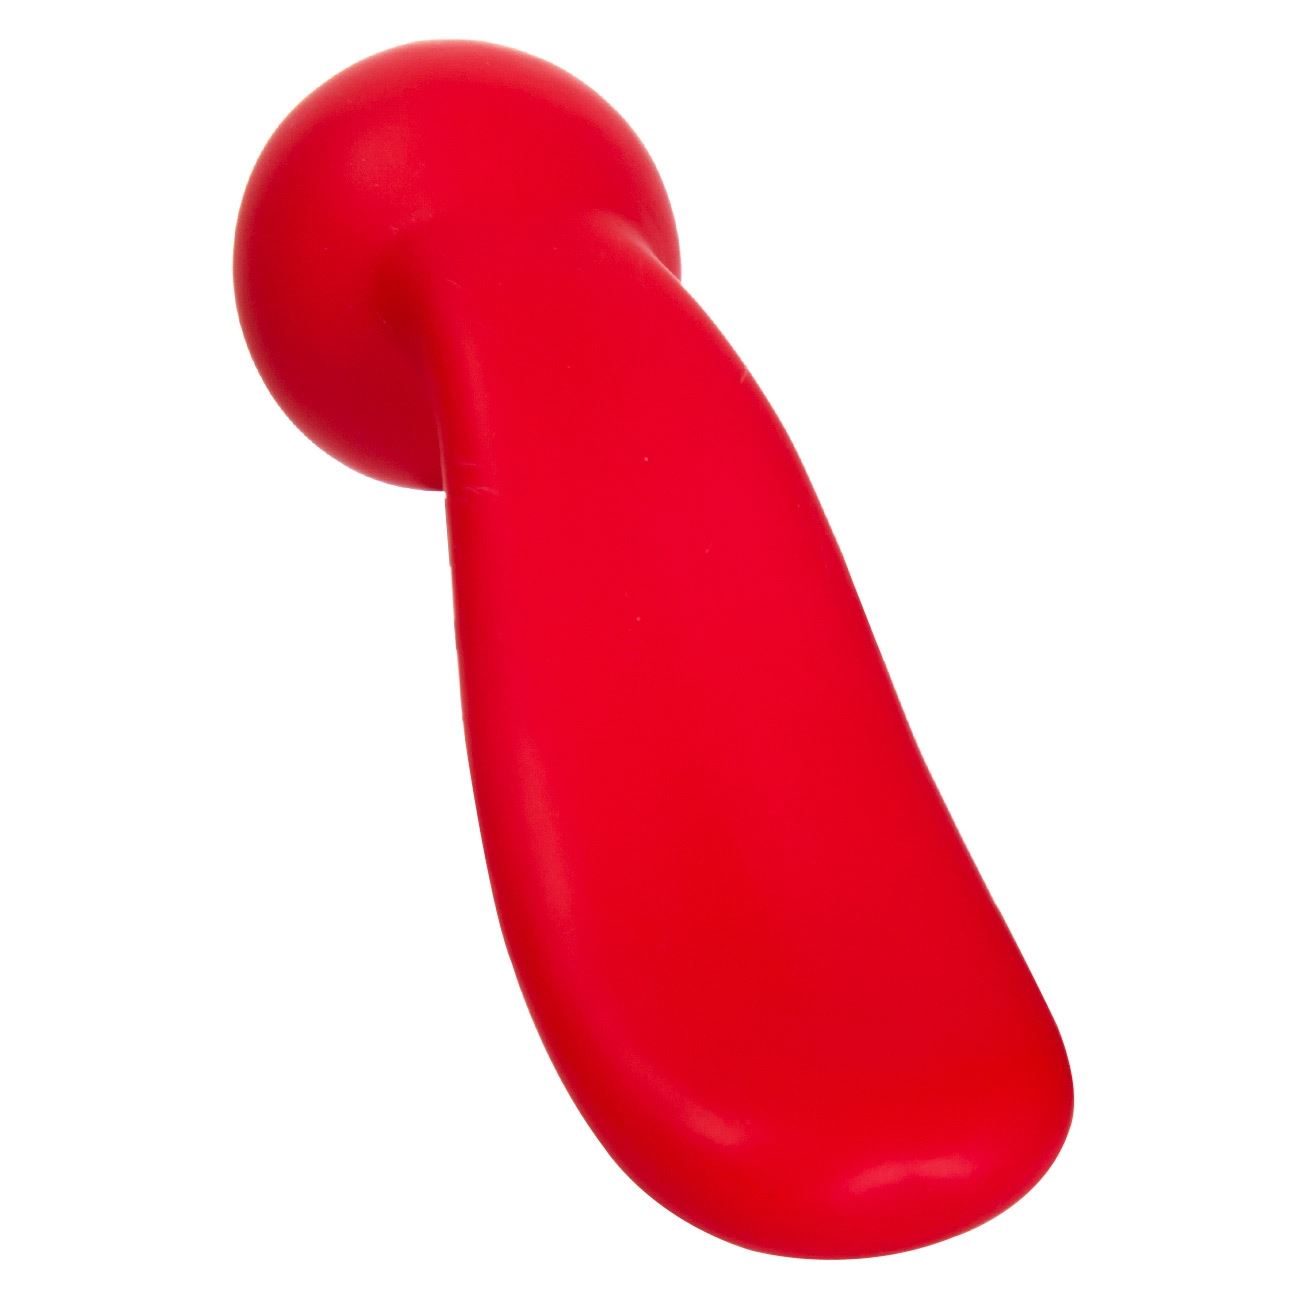 Kutya játék műanyag nyelv vörös 19 cm.